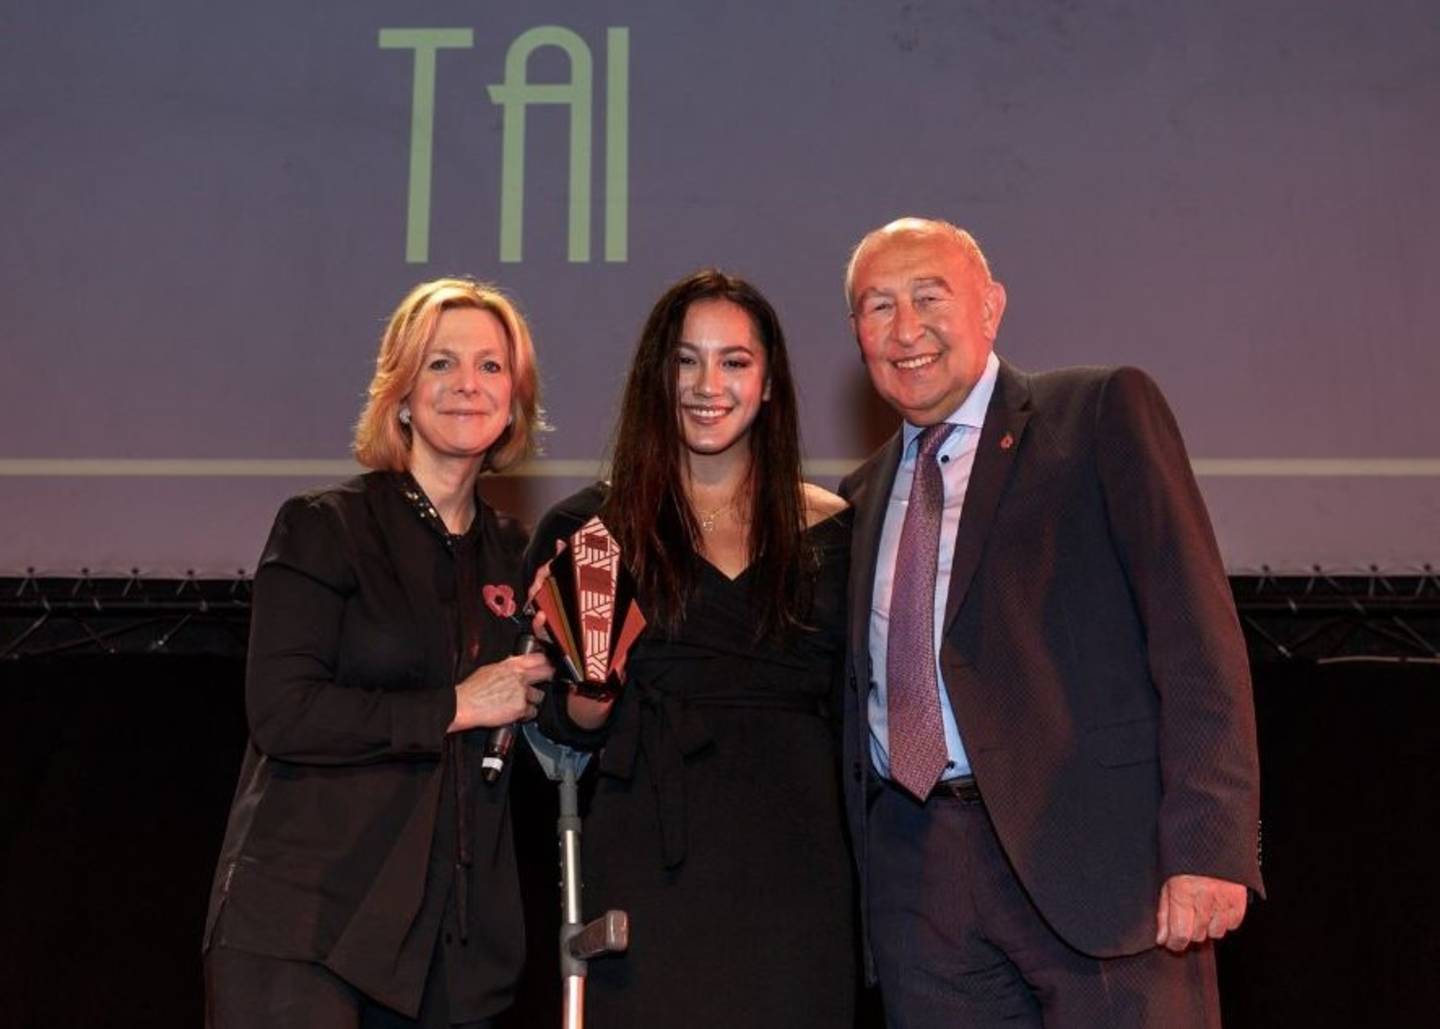 Alice Tai Athlete of the Year at British Swimming Awards 2019